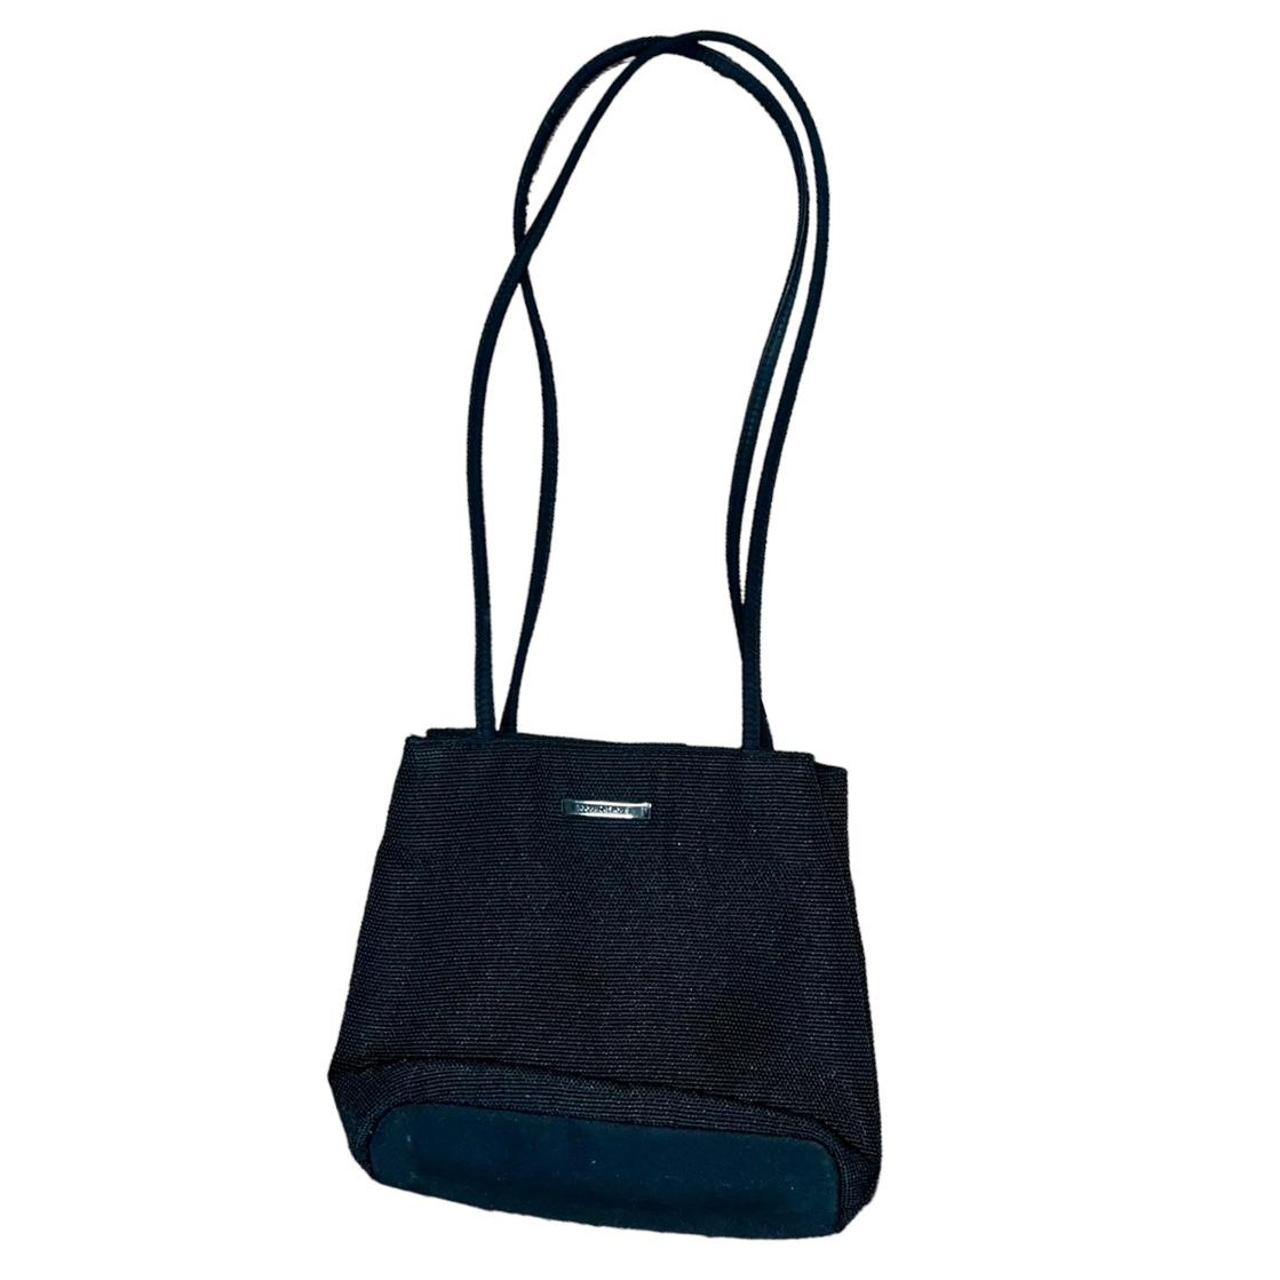 The Sak Small Black Leather Purse with Short Handle, Zip Pocket, Zip  Closure | eBay